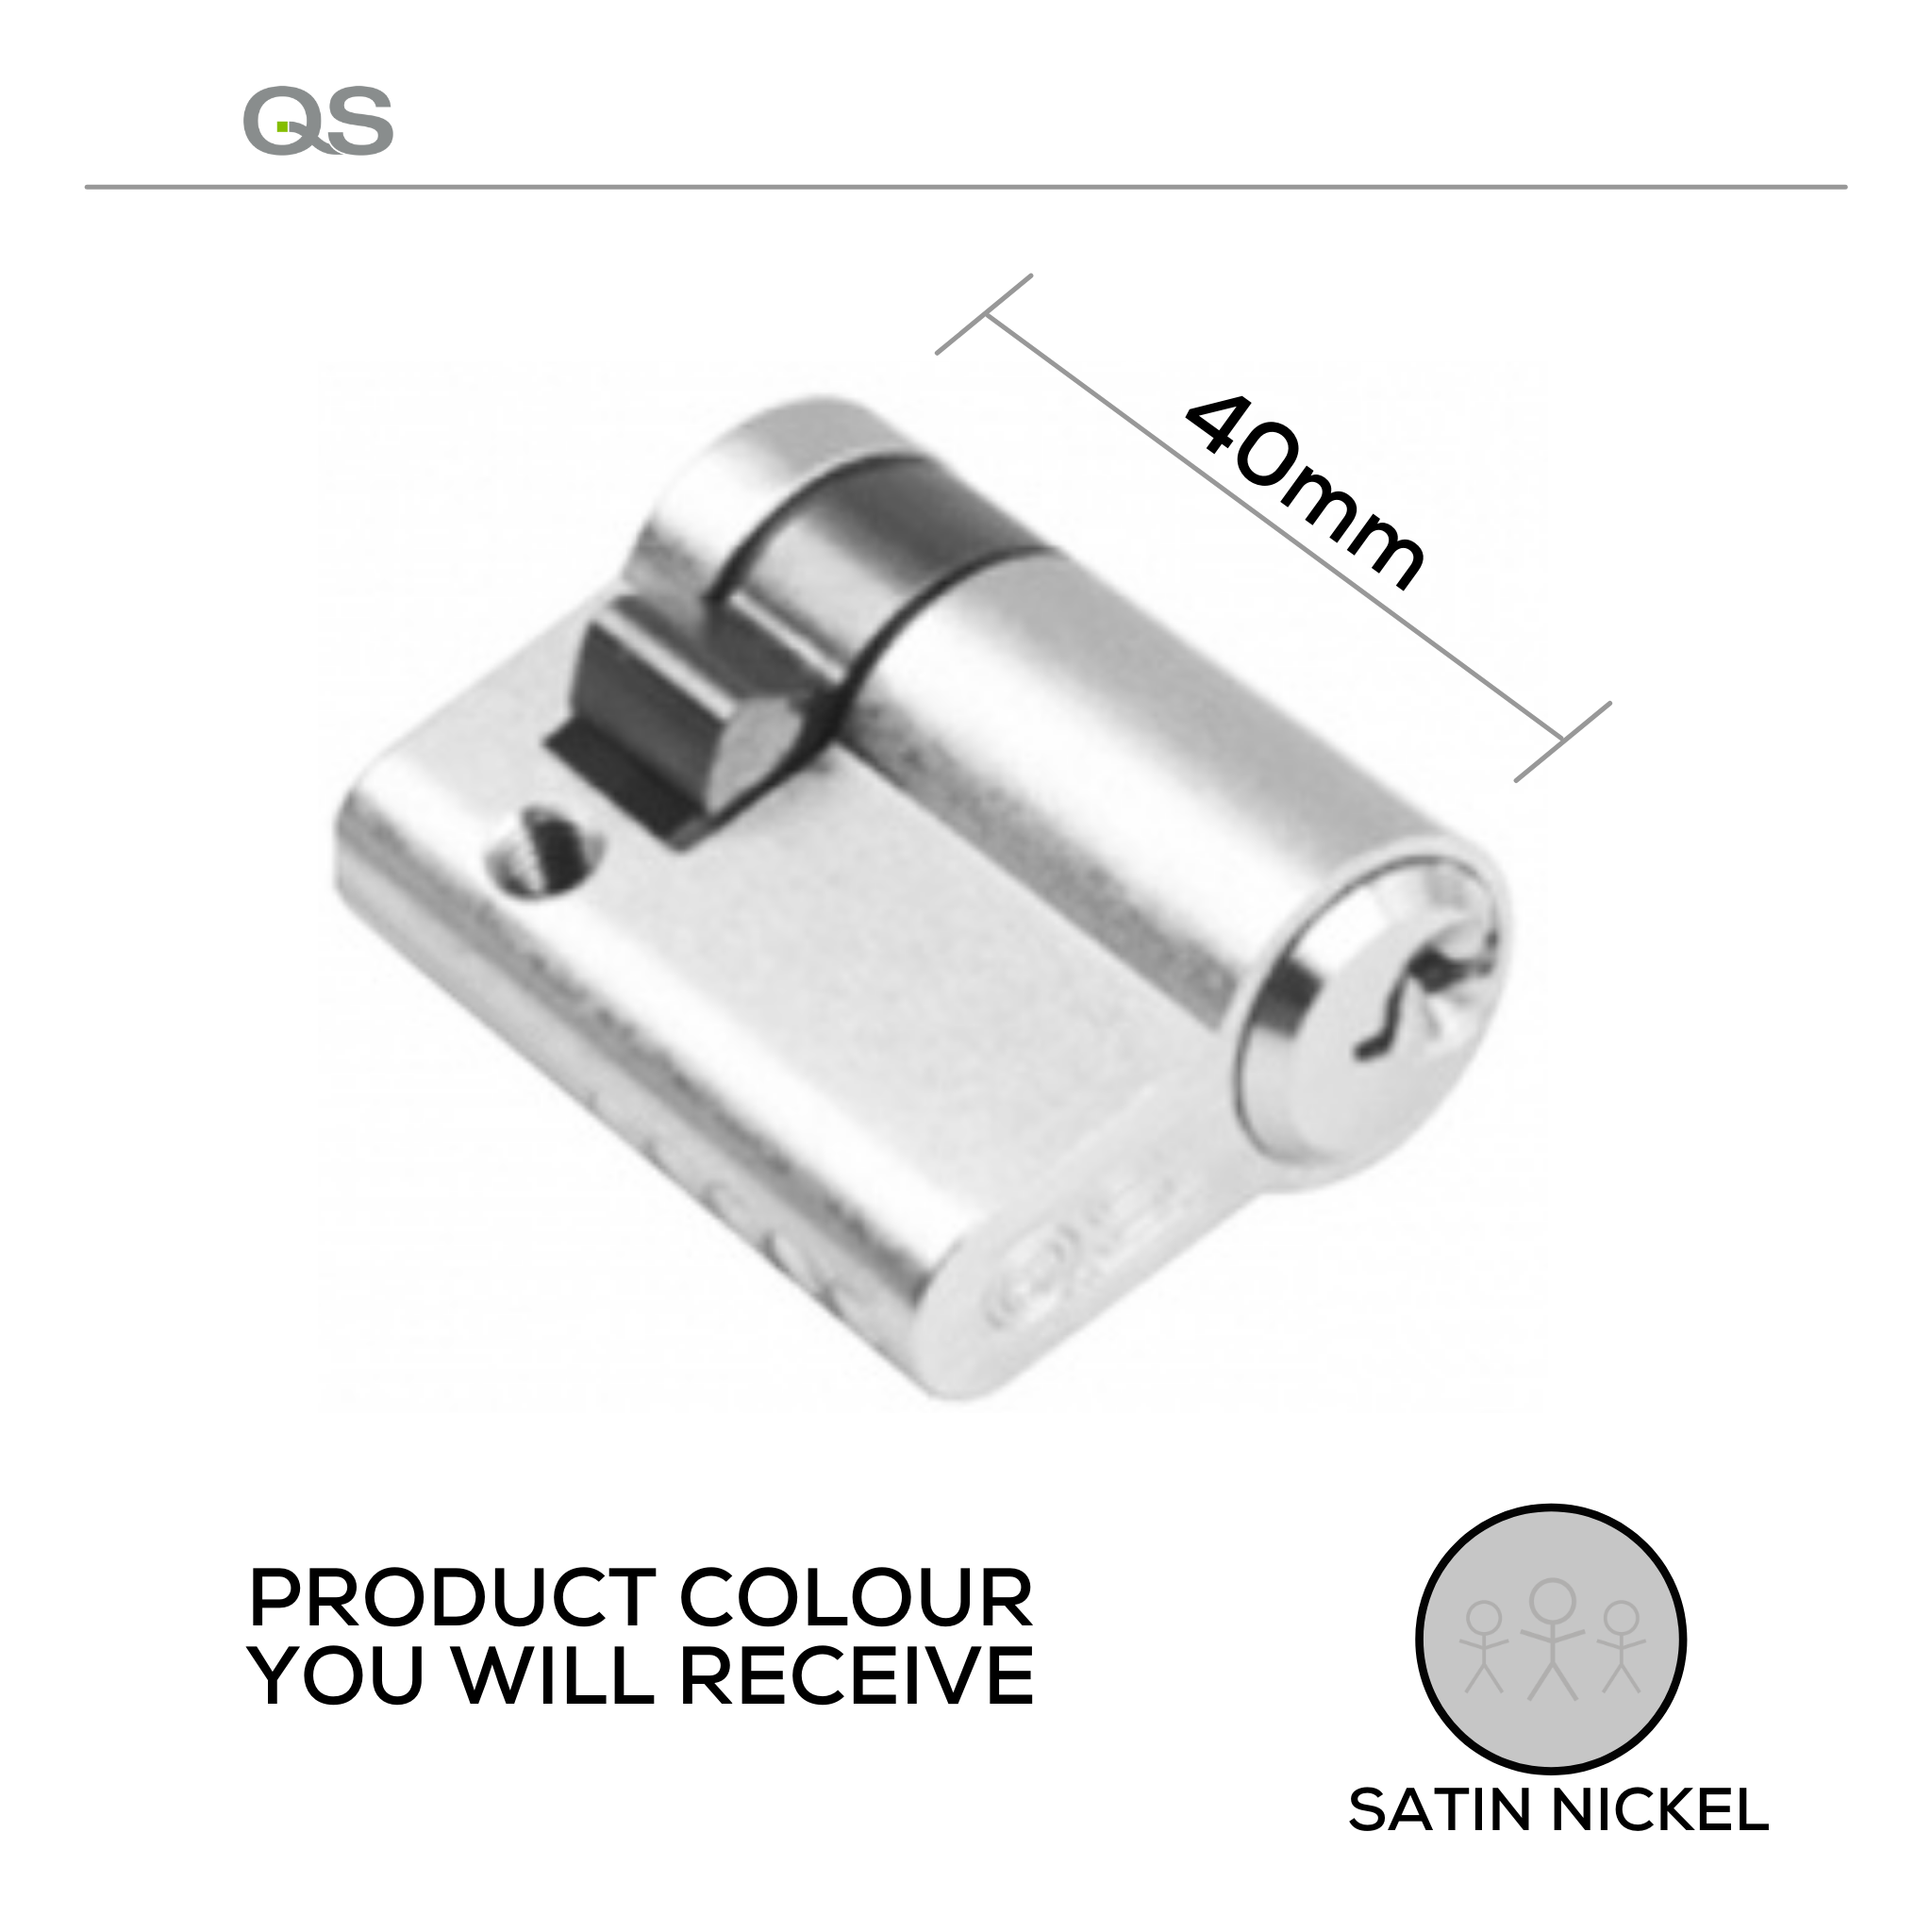 QS1102SN, 40mm - 30/10, Half (Single Cylinder), Key, Keyed to Differ (Standard), 3 Keys, 5 Pin, Satin Nickel, QS